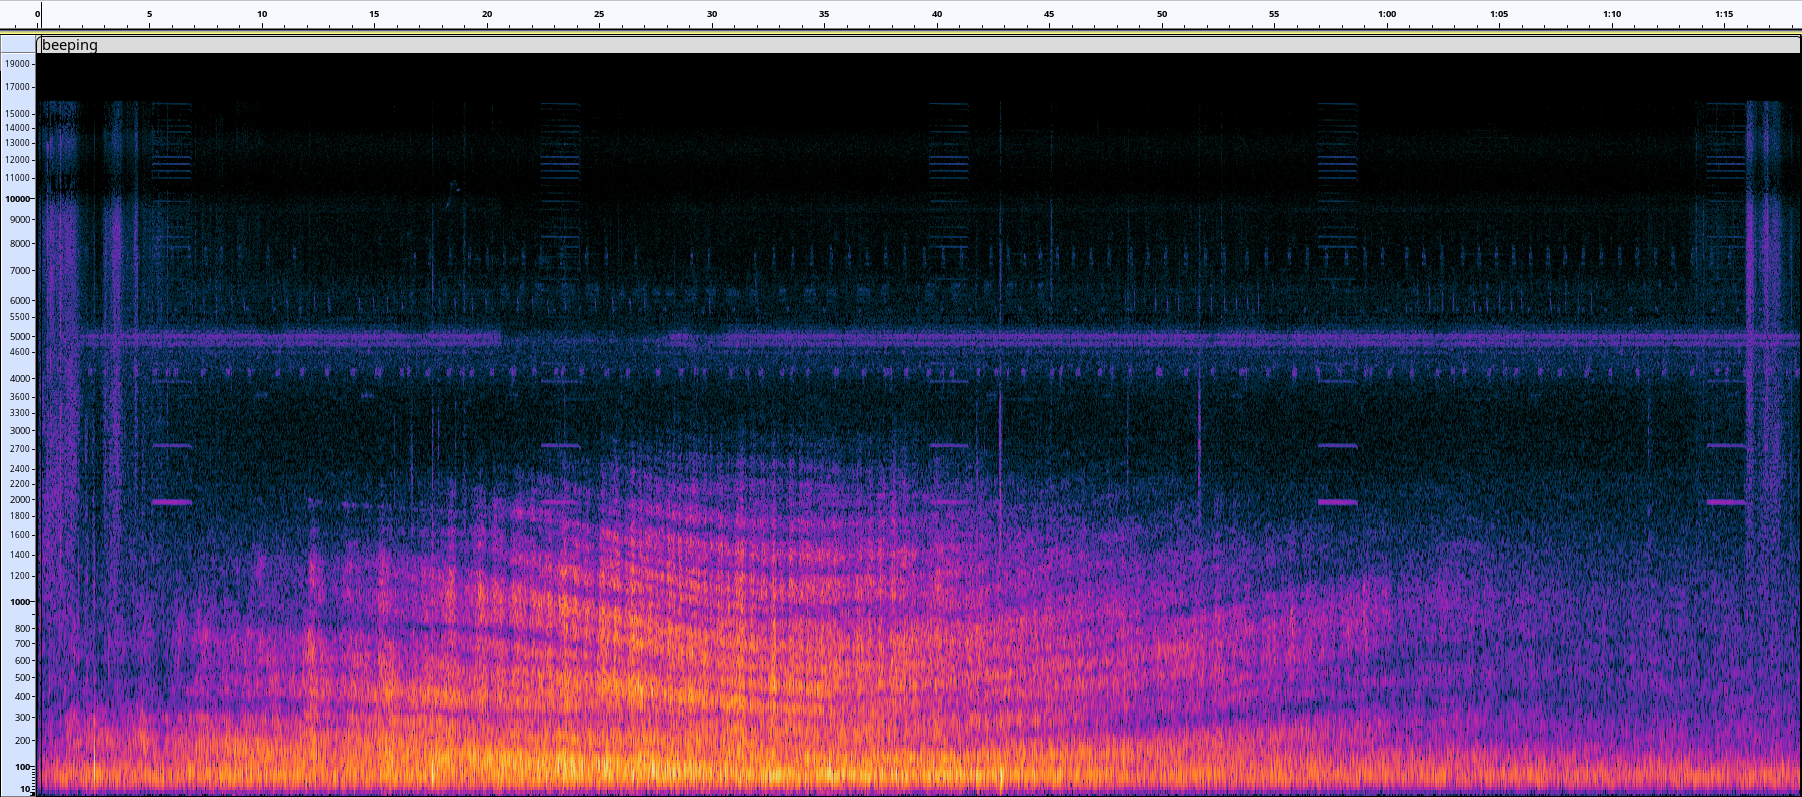 spectrum analysis of hj's audio file